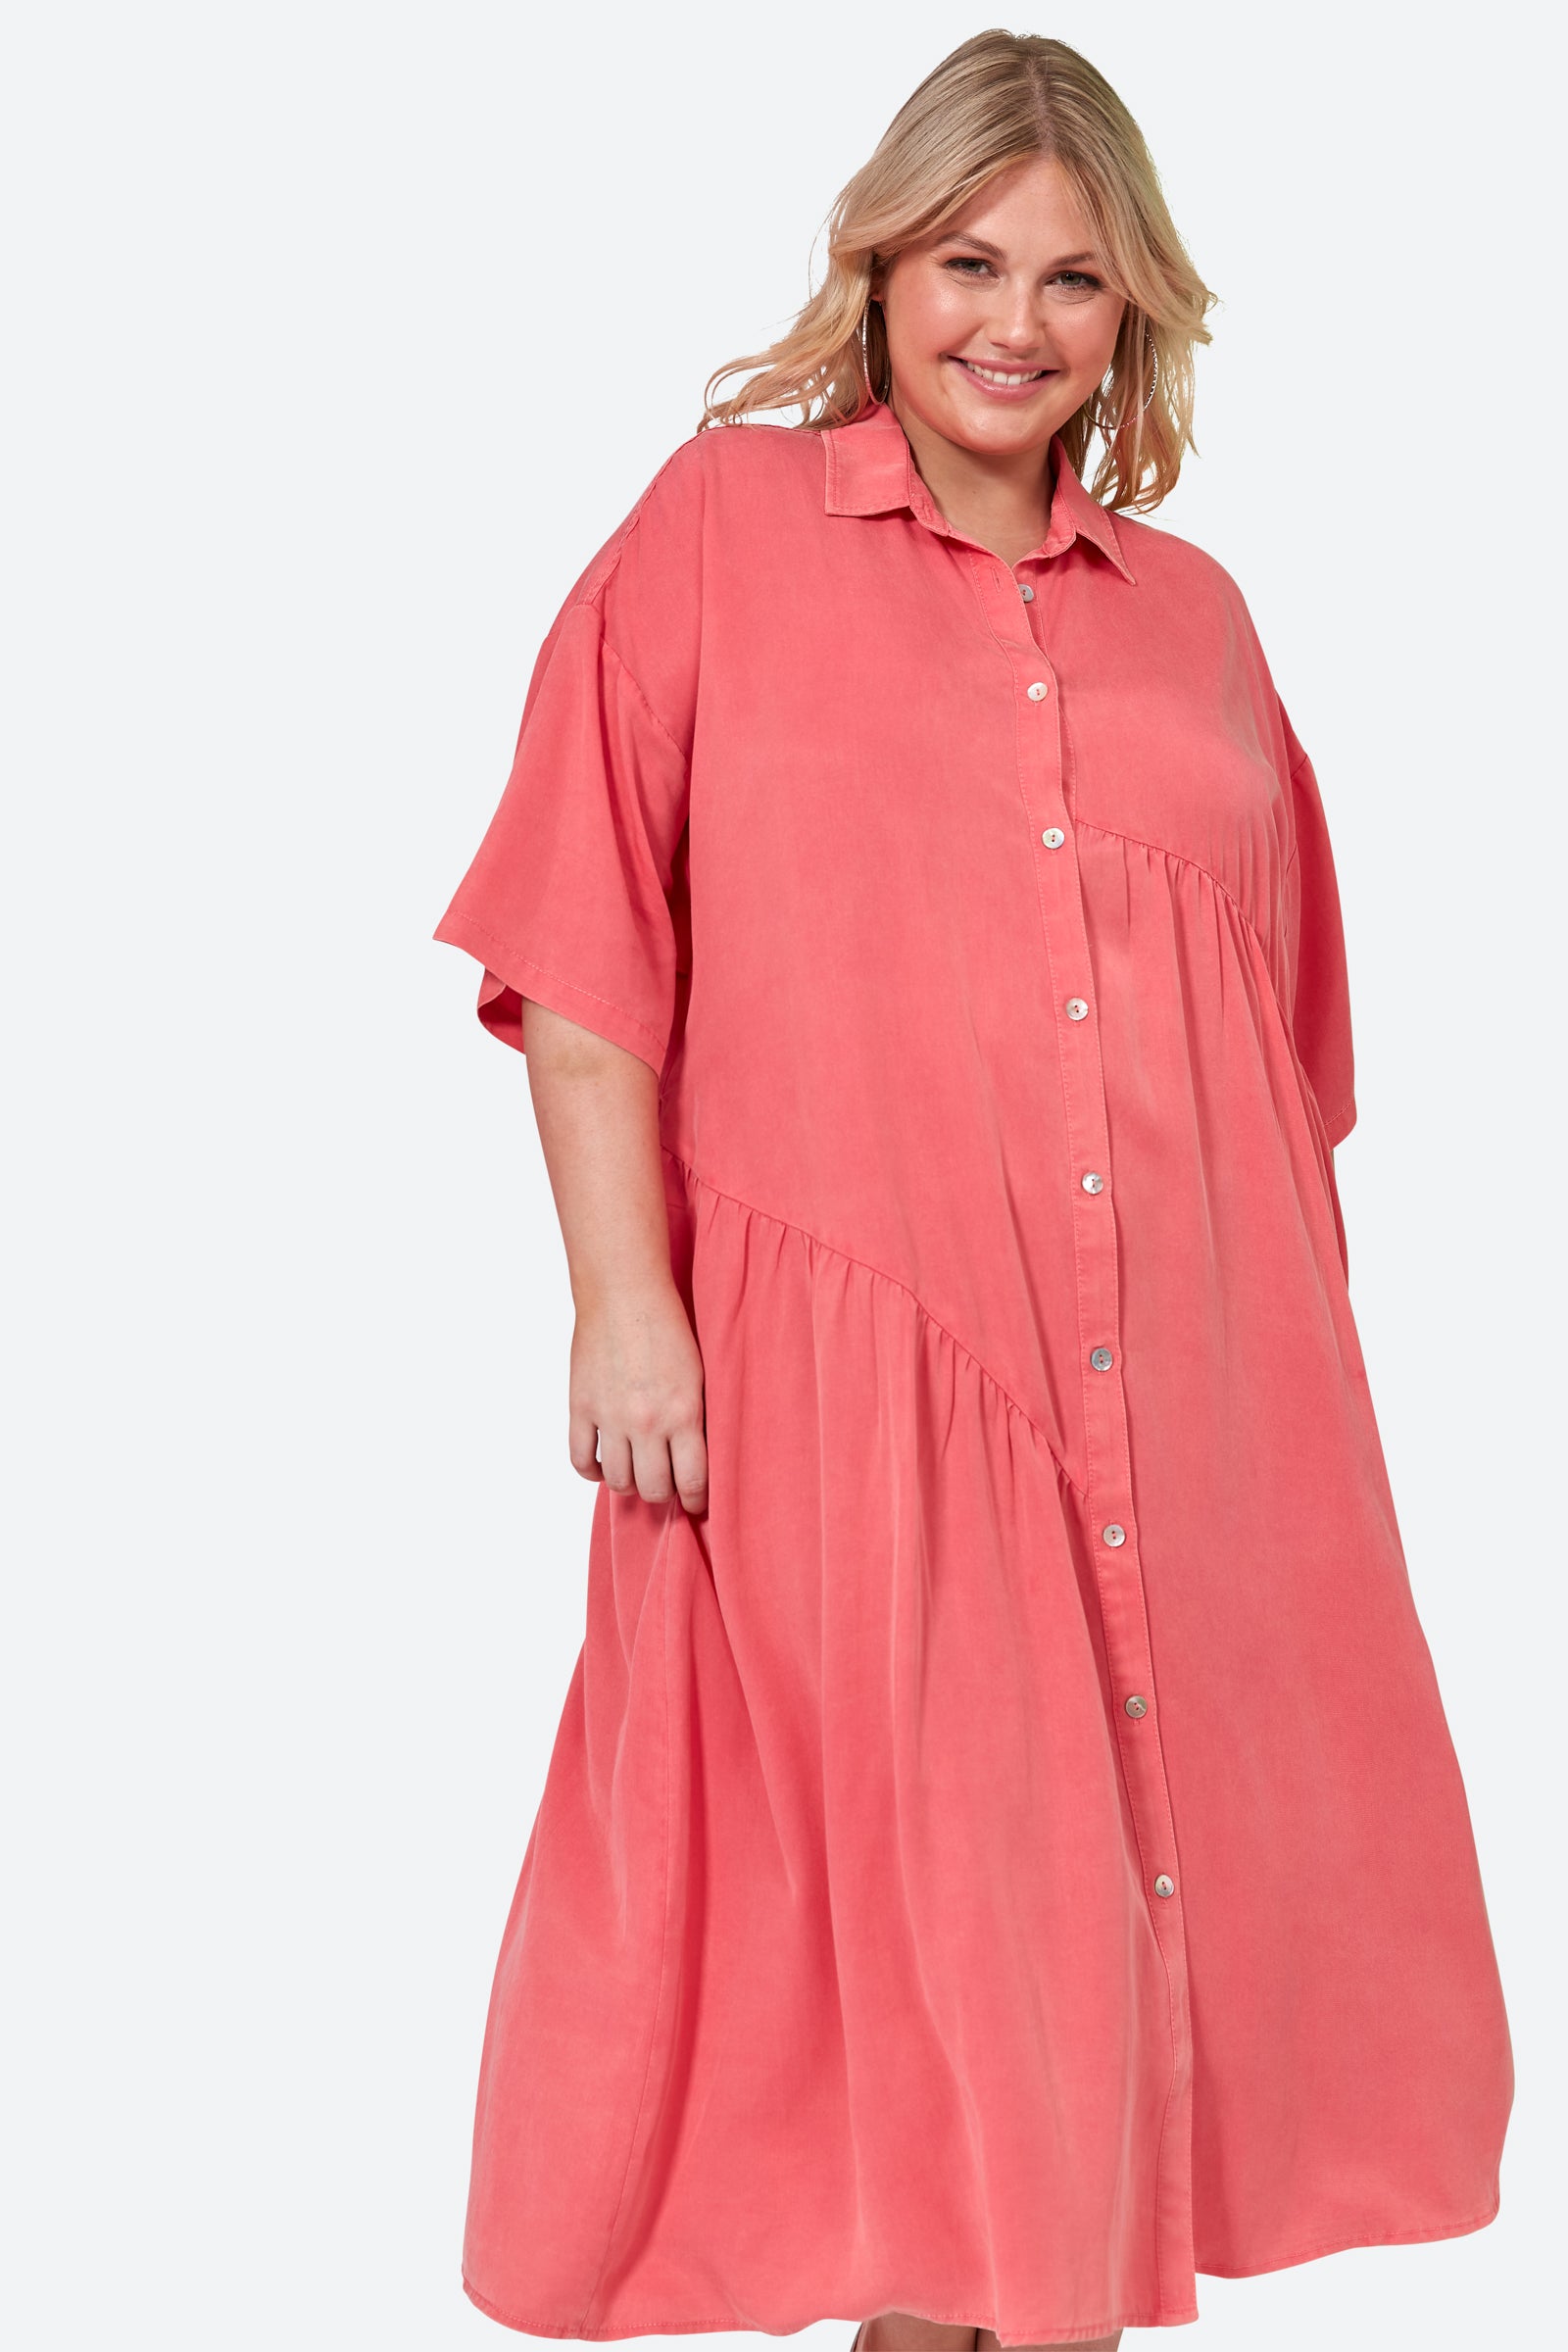 Elan Shirt Dress - Lychee - eb&ive Clothing - Shirt Dress One Size